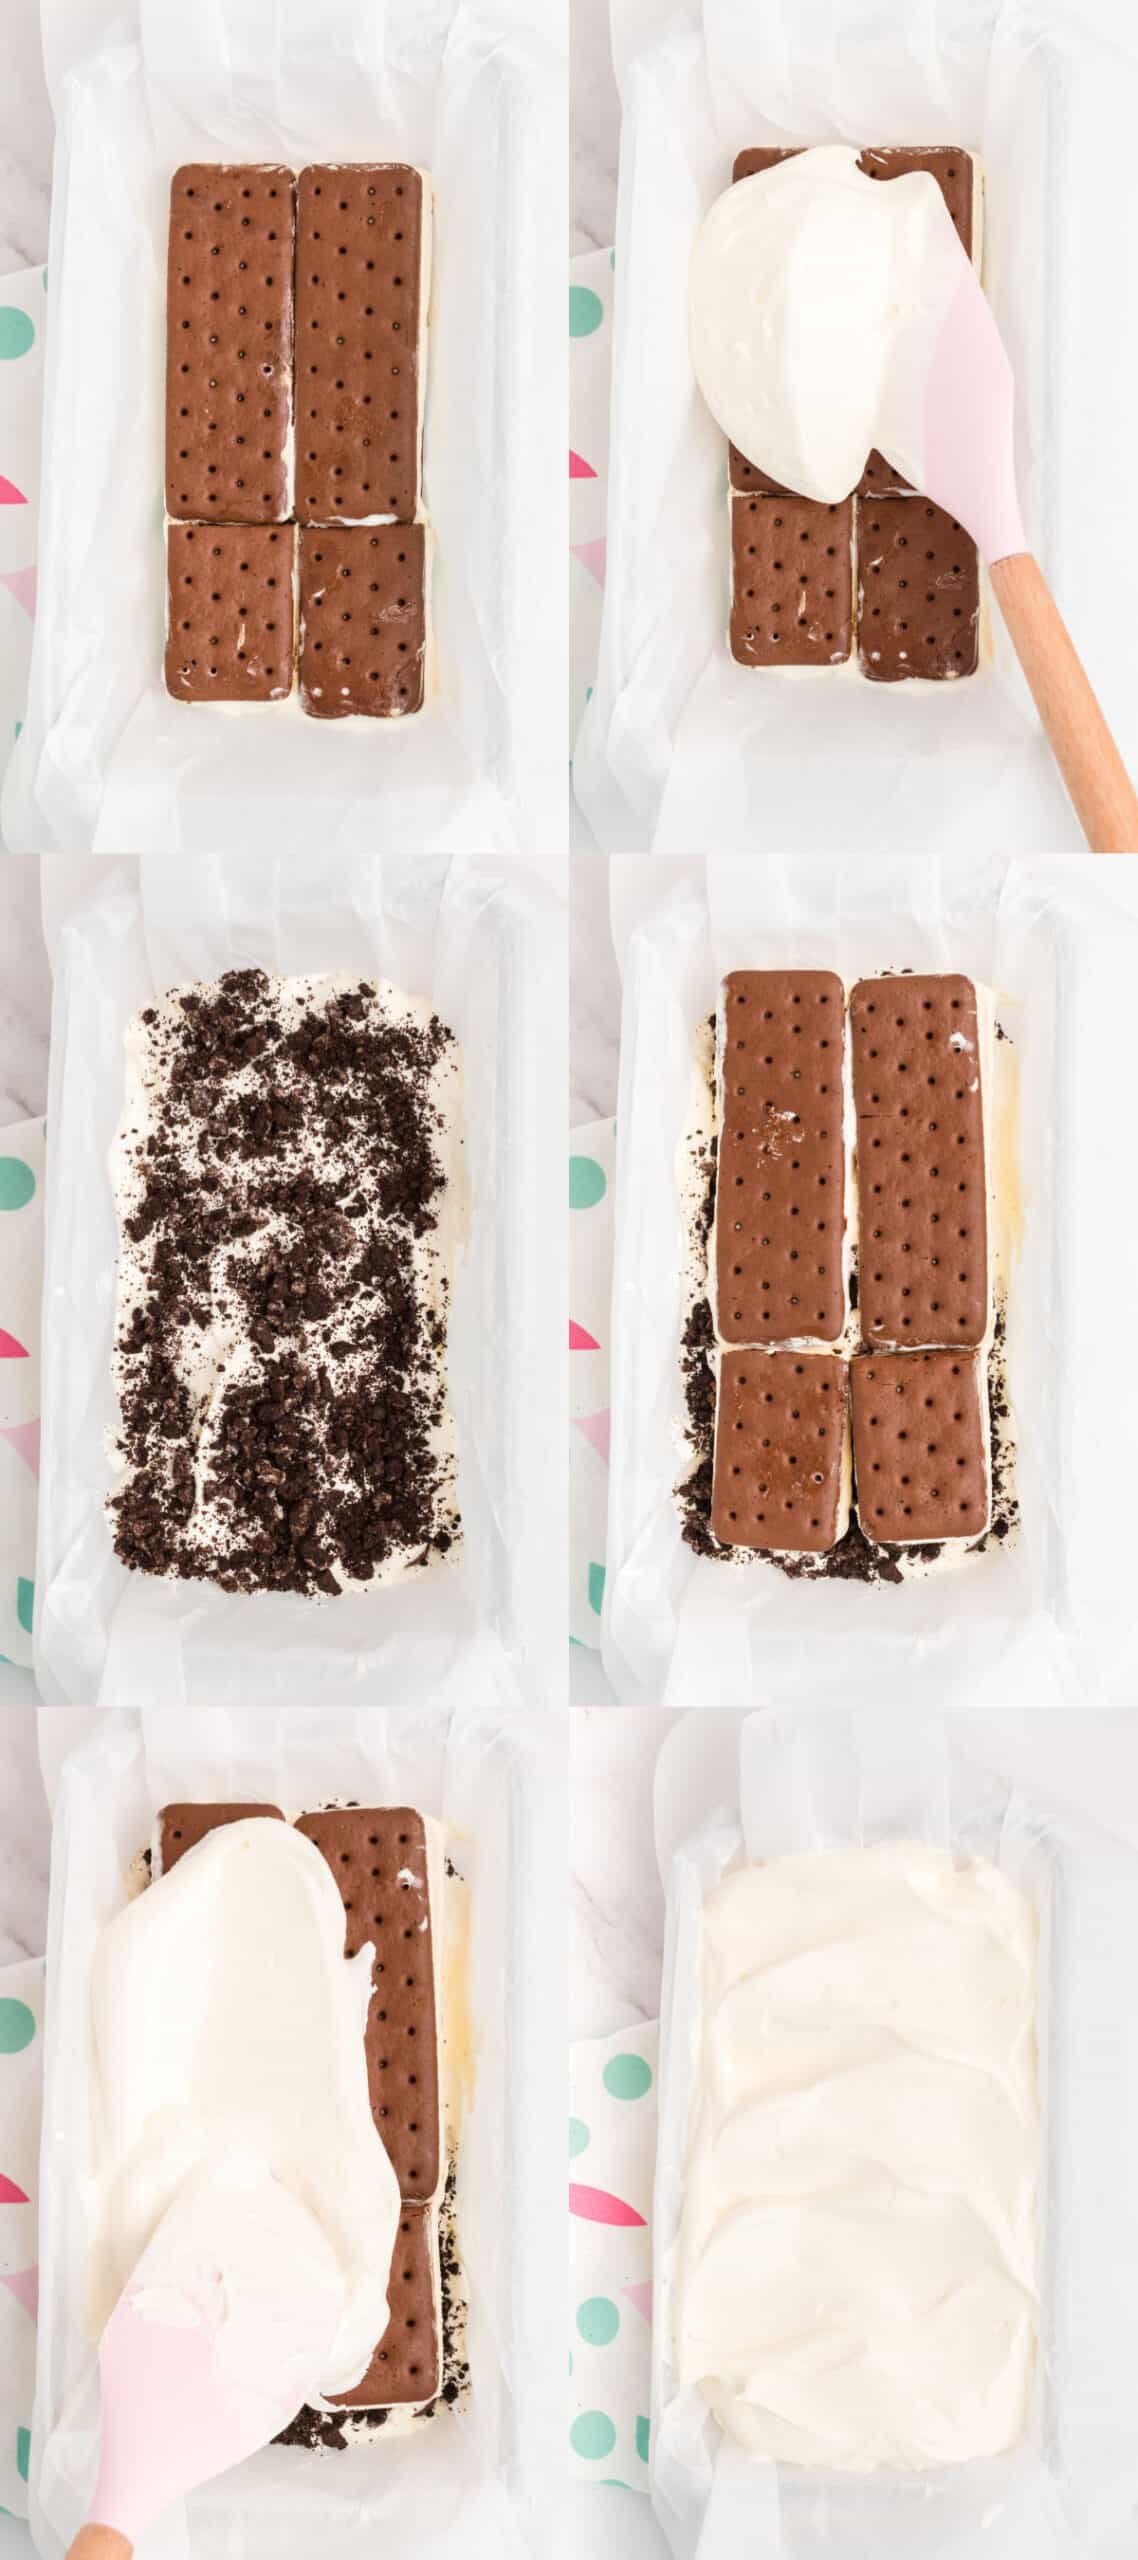 Ice Cream Sandwich Cake Recipe